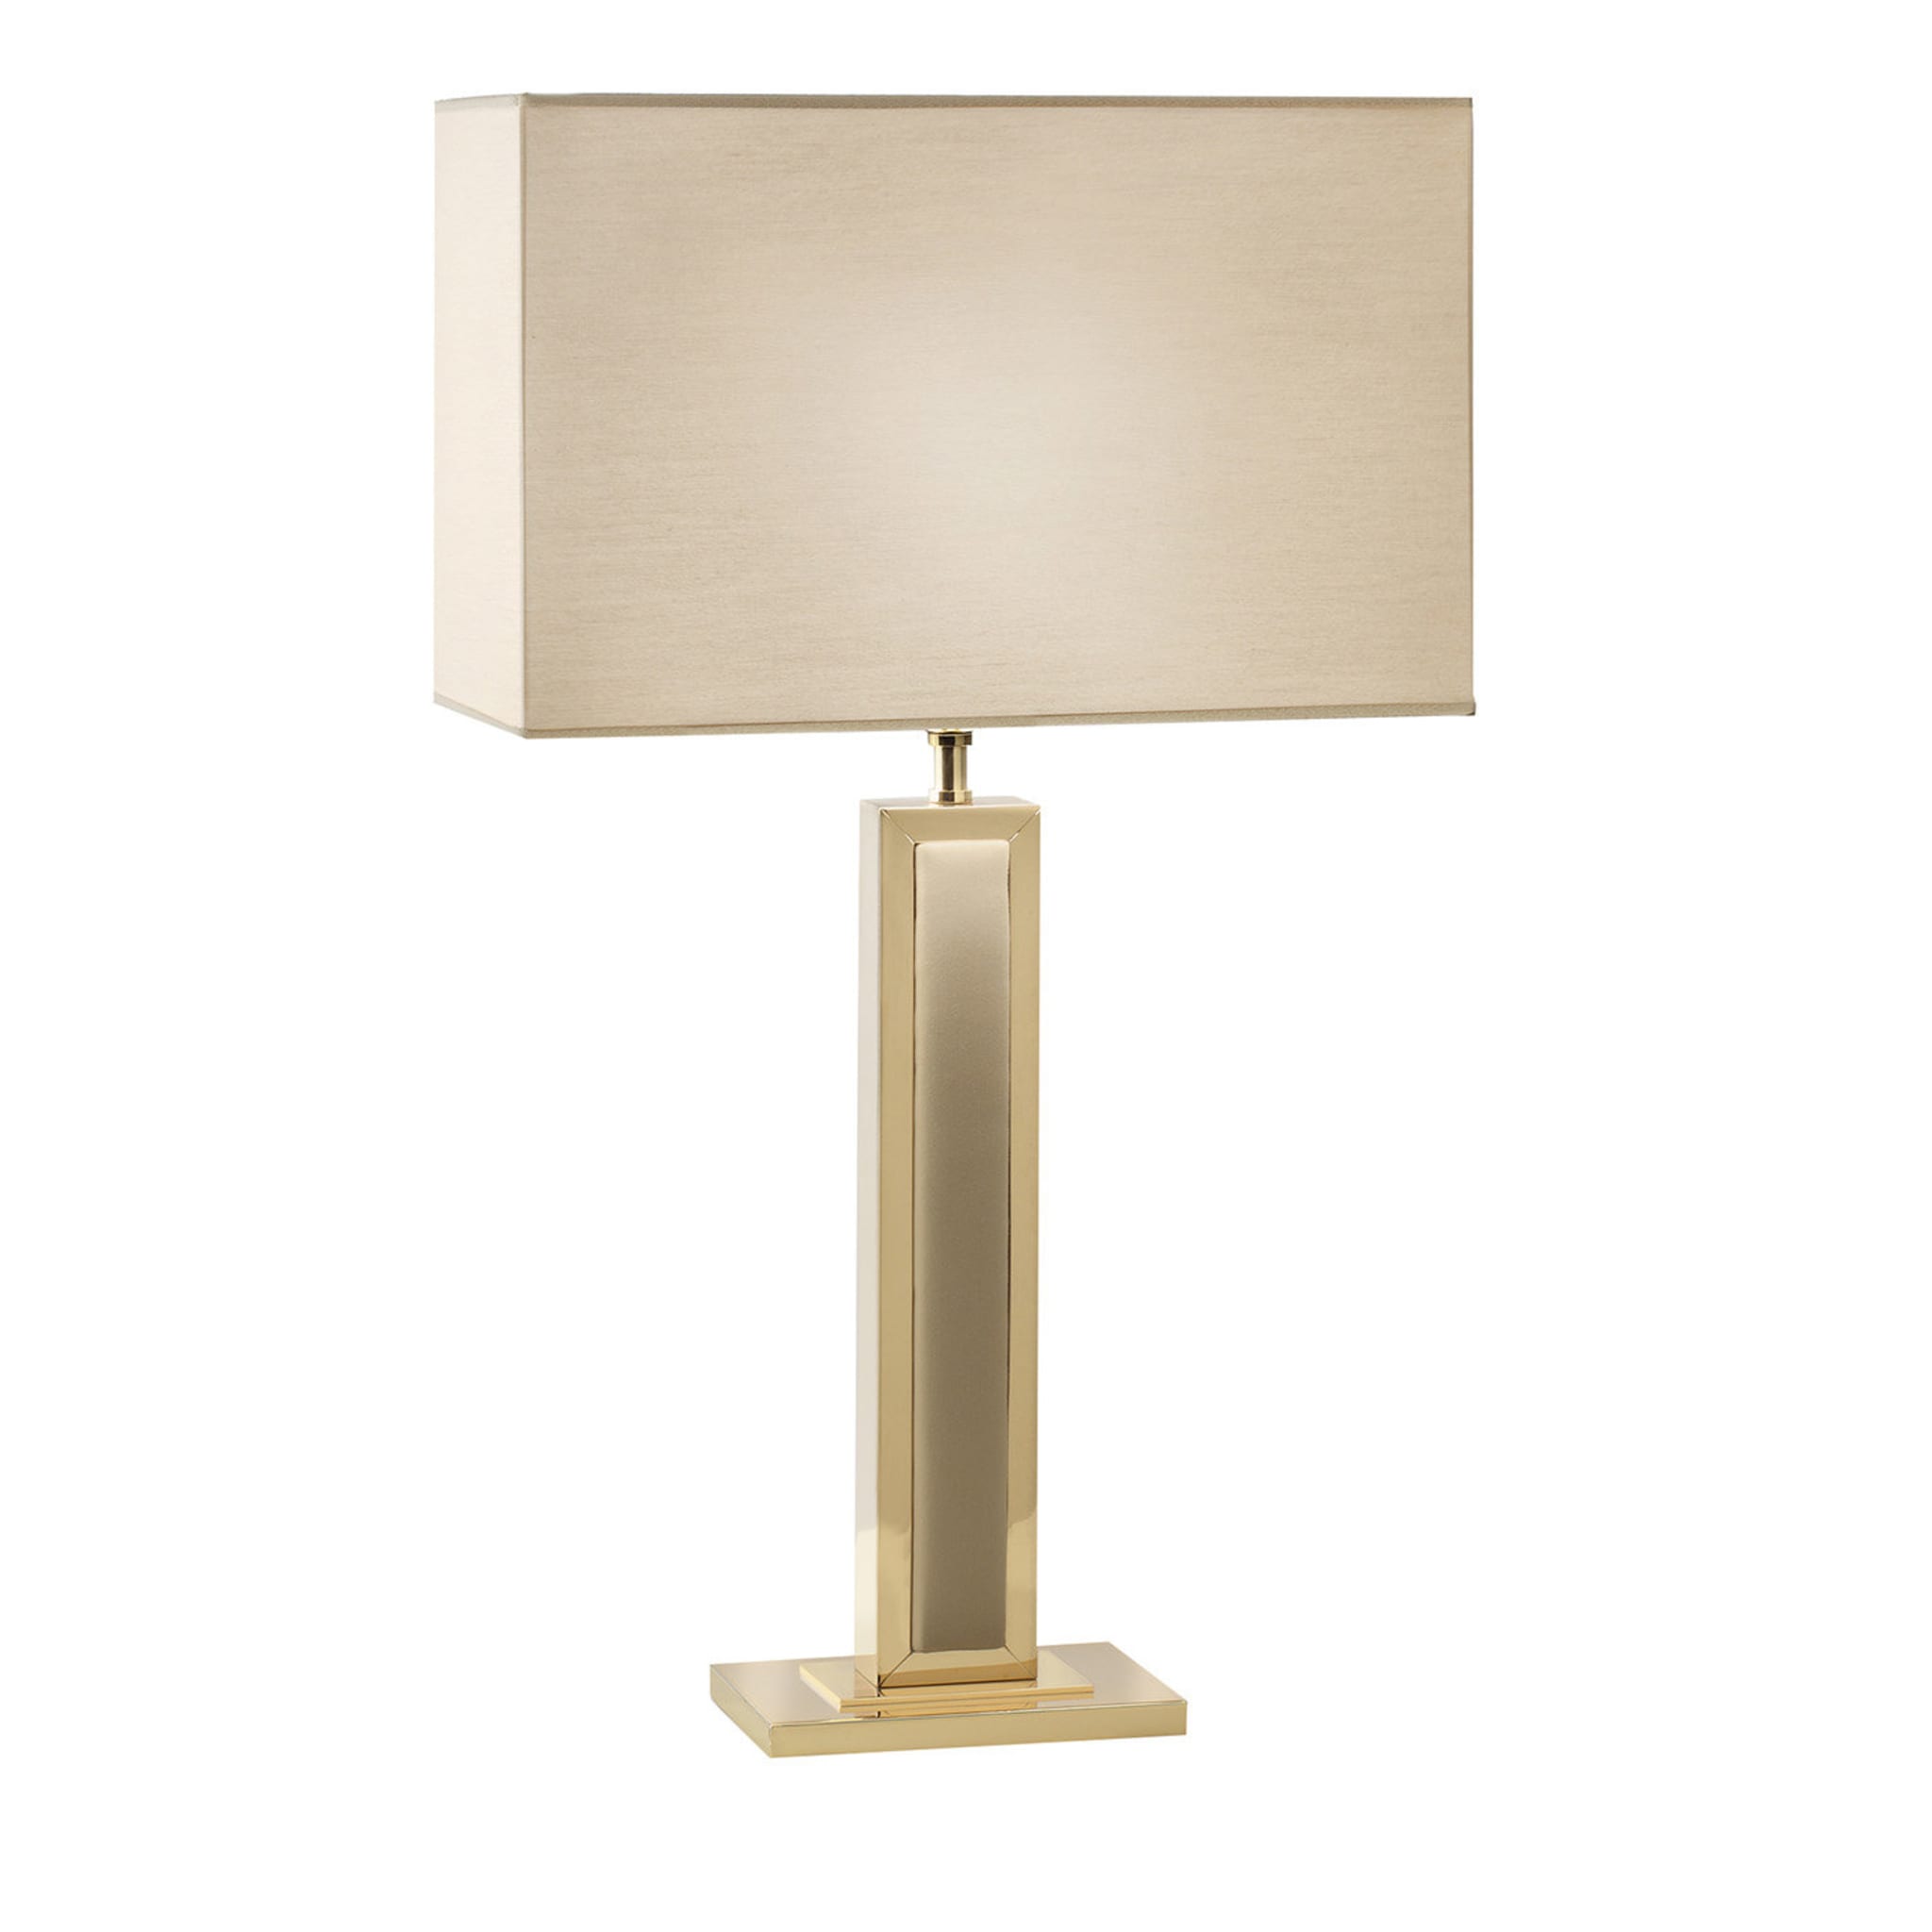 Cobalto Gold Table Lamp #2 - Main view